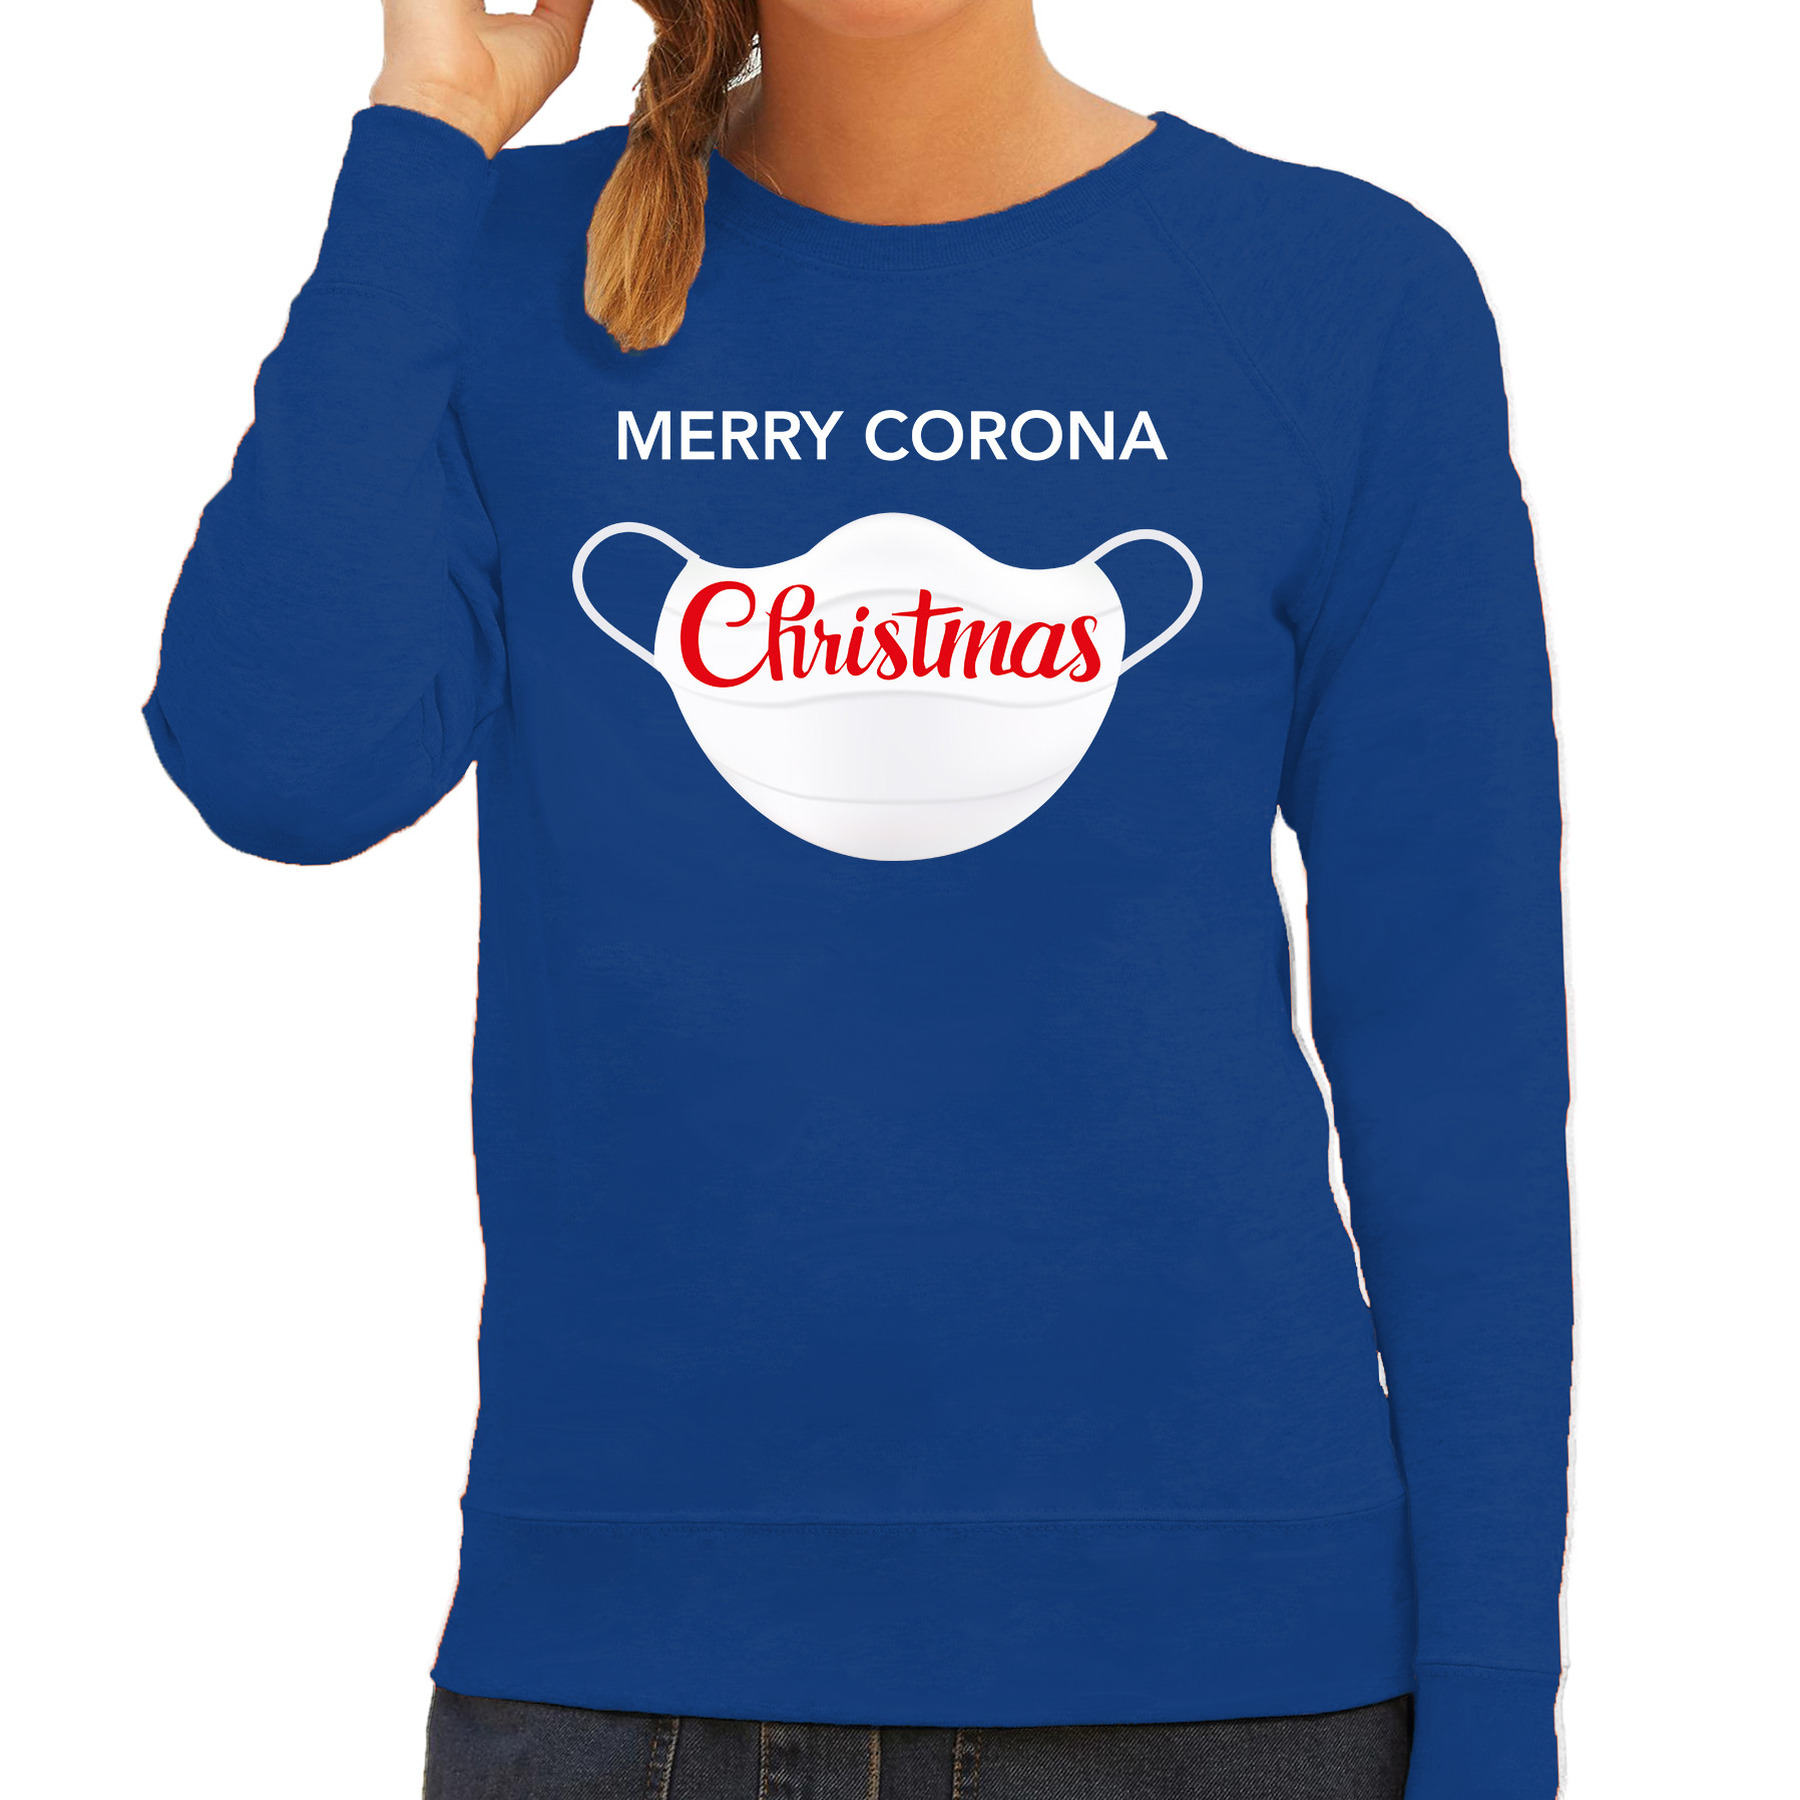 Blauwe Kersttrui-Kerstkleding Merry corona Christmas voor dames